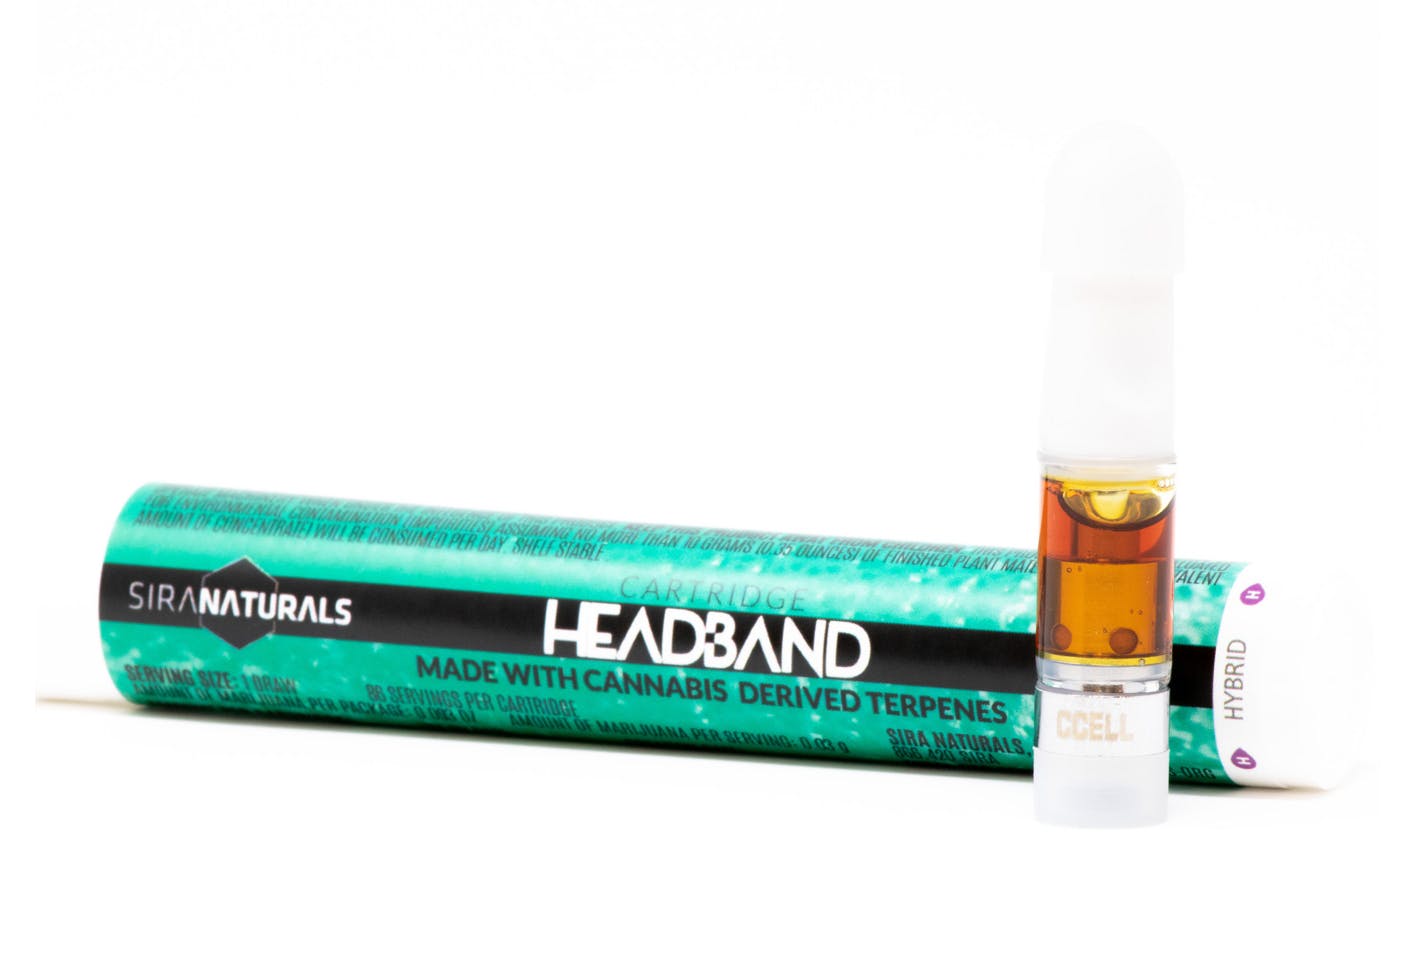 marijuana-dispensaries-29-franklin-st-needham-heights-cannabis-derived-terp-cartridge-headband